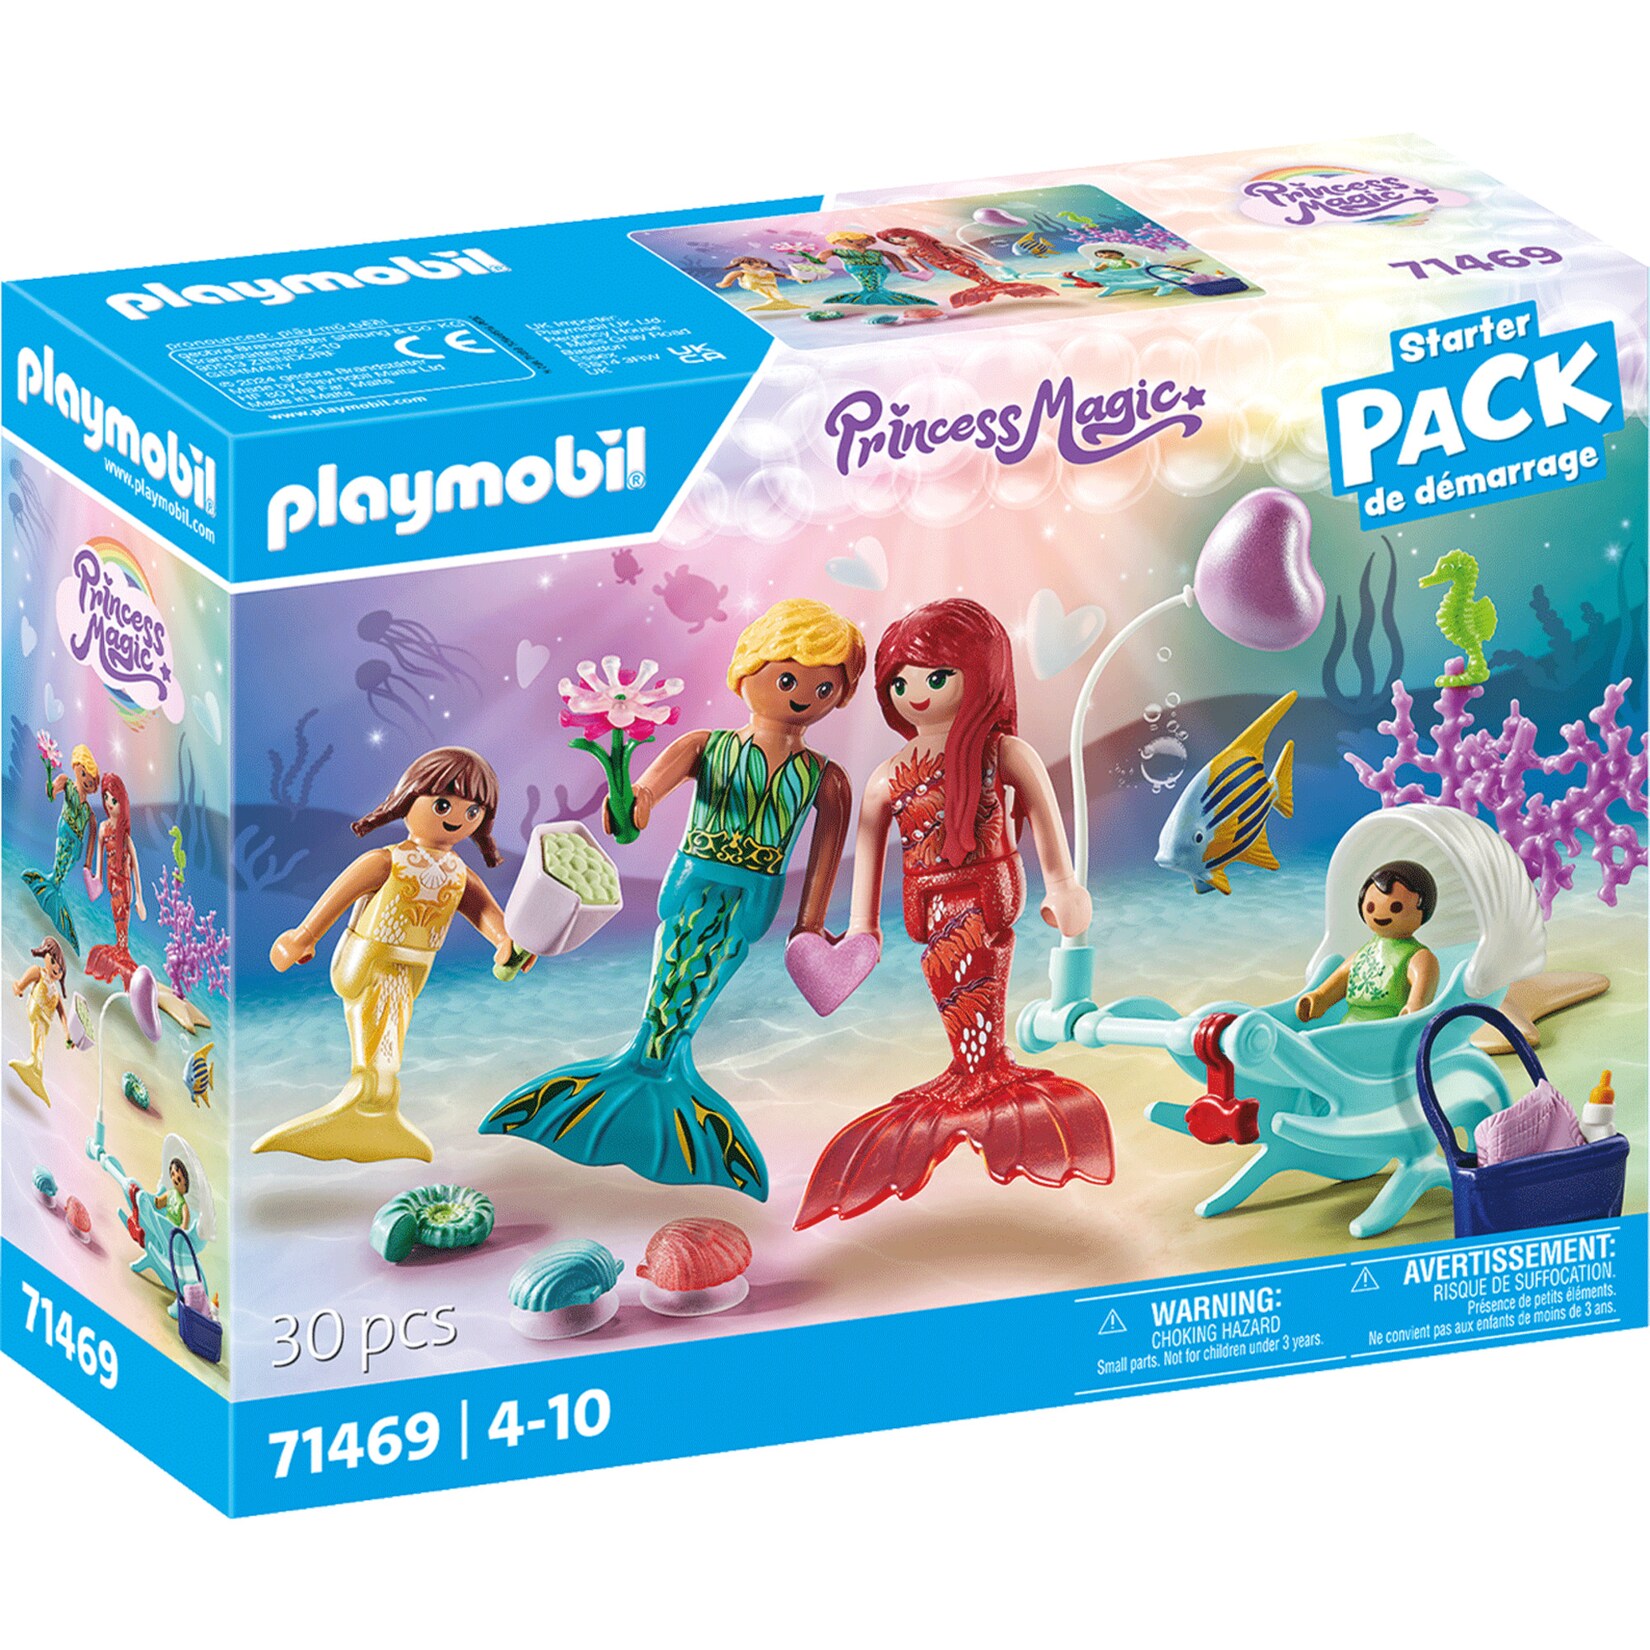 PLAYMOBIL Konstruktionsspielzeug Princess Magic Starter Pack Liebevolle Meerjungfrauenfamilie